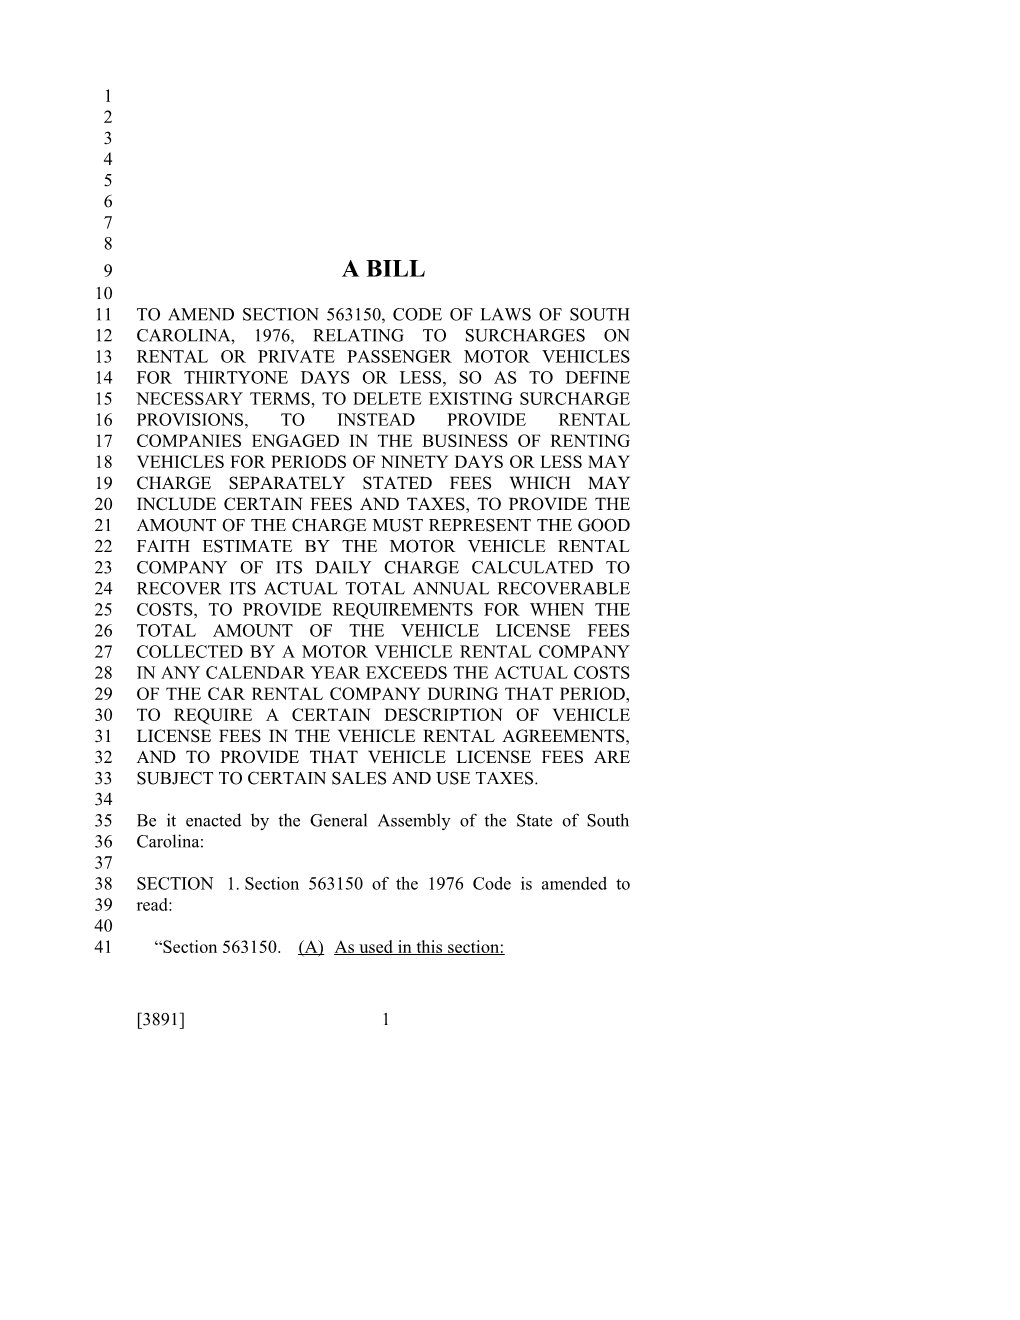 2015-2016 Bill 3891 Text of Previous Version (Mar. 24, 2015) - South Carolina Legislature Online